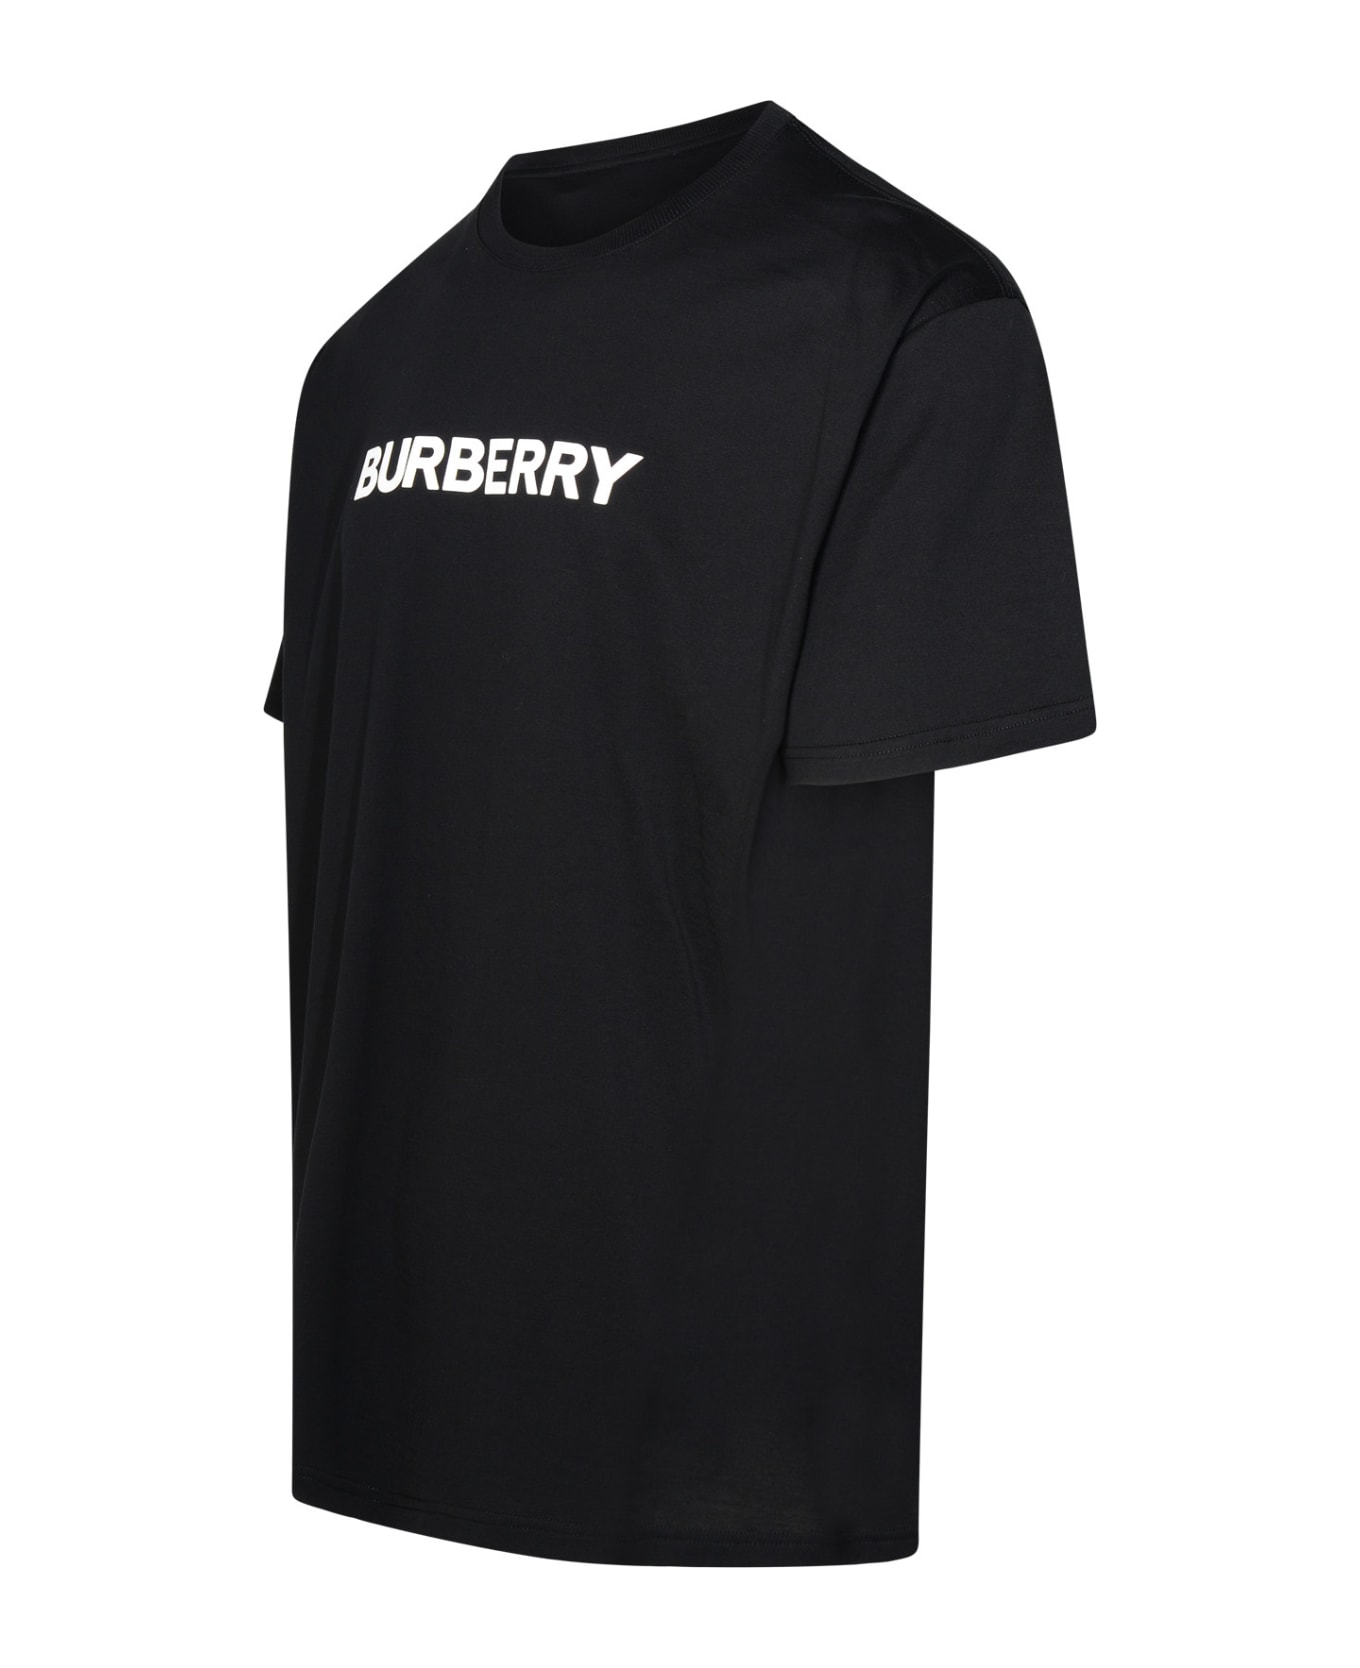 Burberry Black Cotton T-shirt - Black シャツ